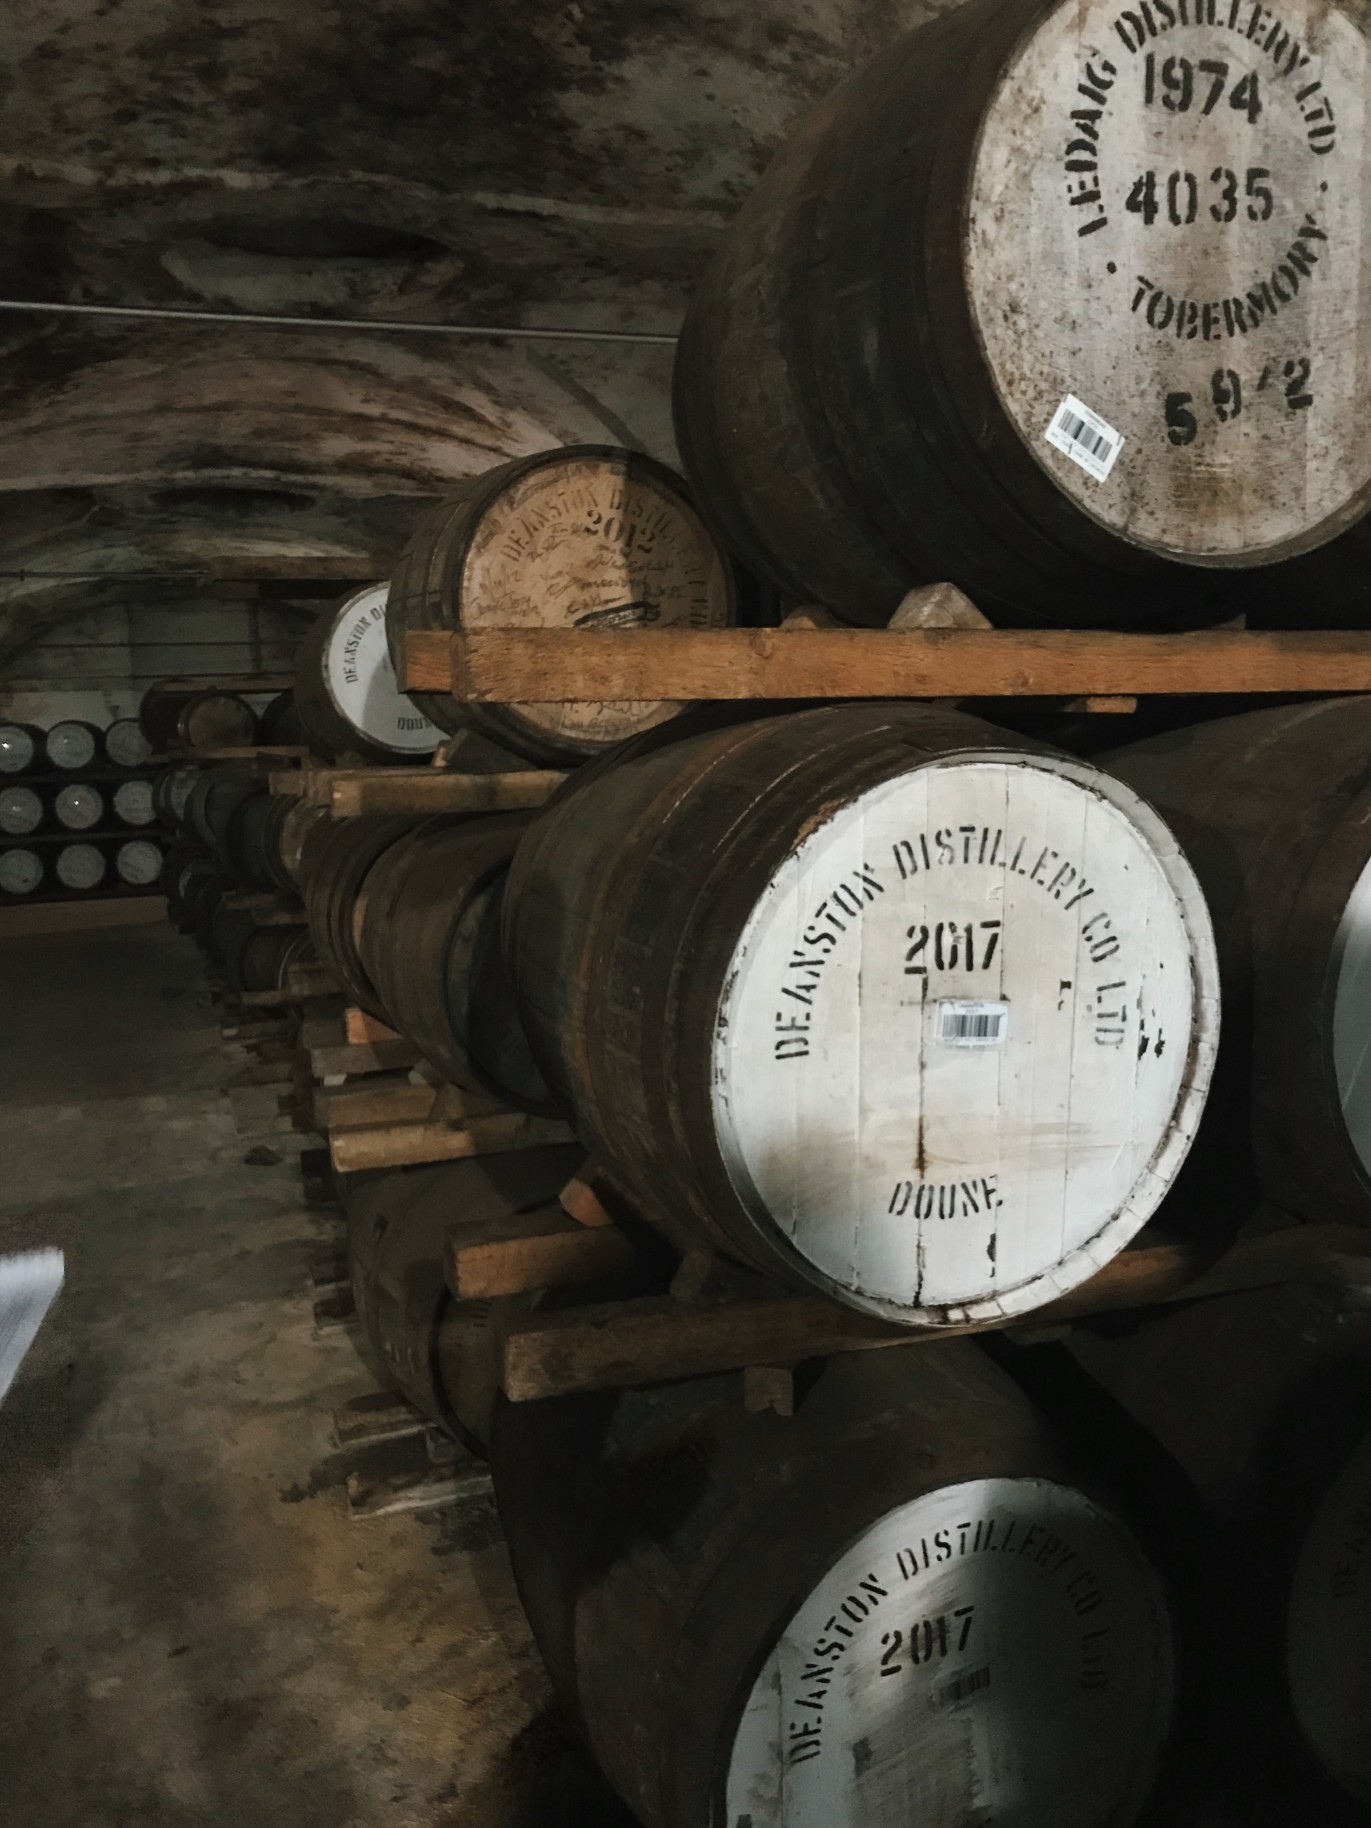 Scotland whisky barrels. 